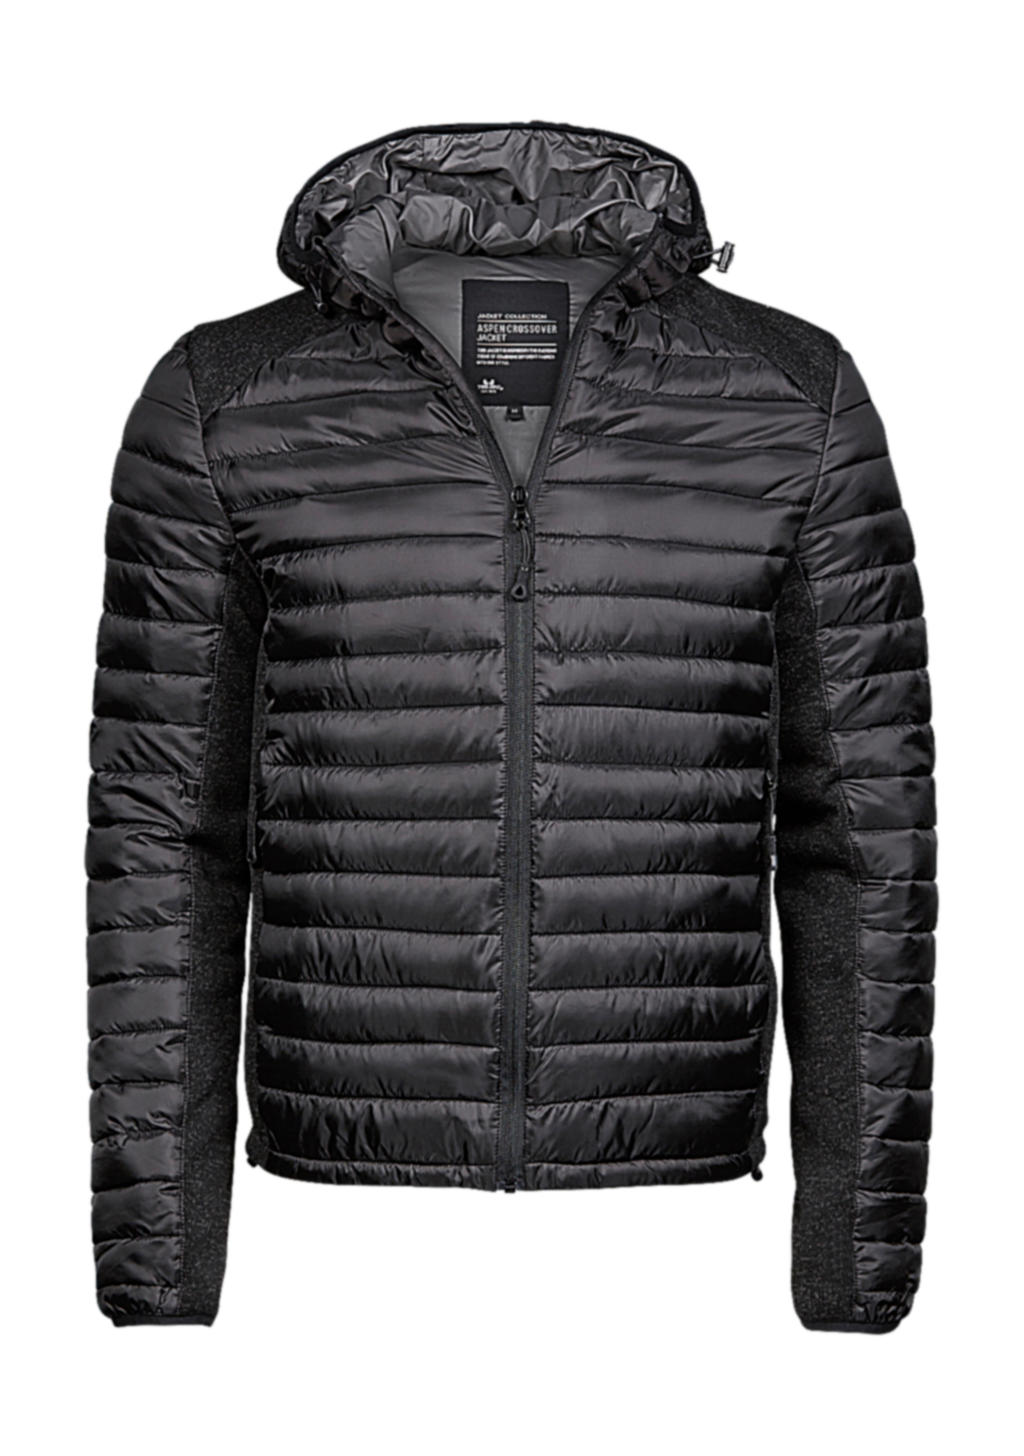  Hooded Outdoor Crossover Jacket in Farbe Black/Black Melange